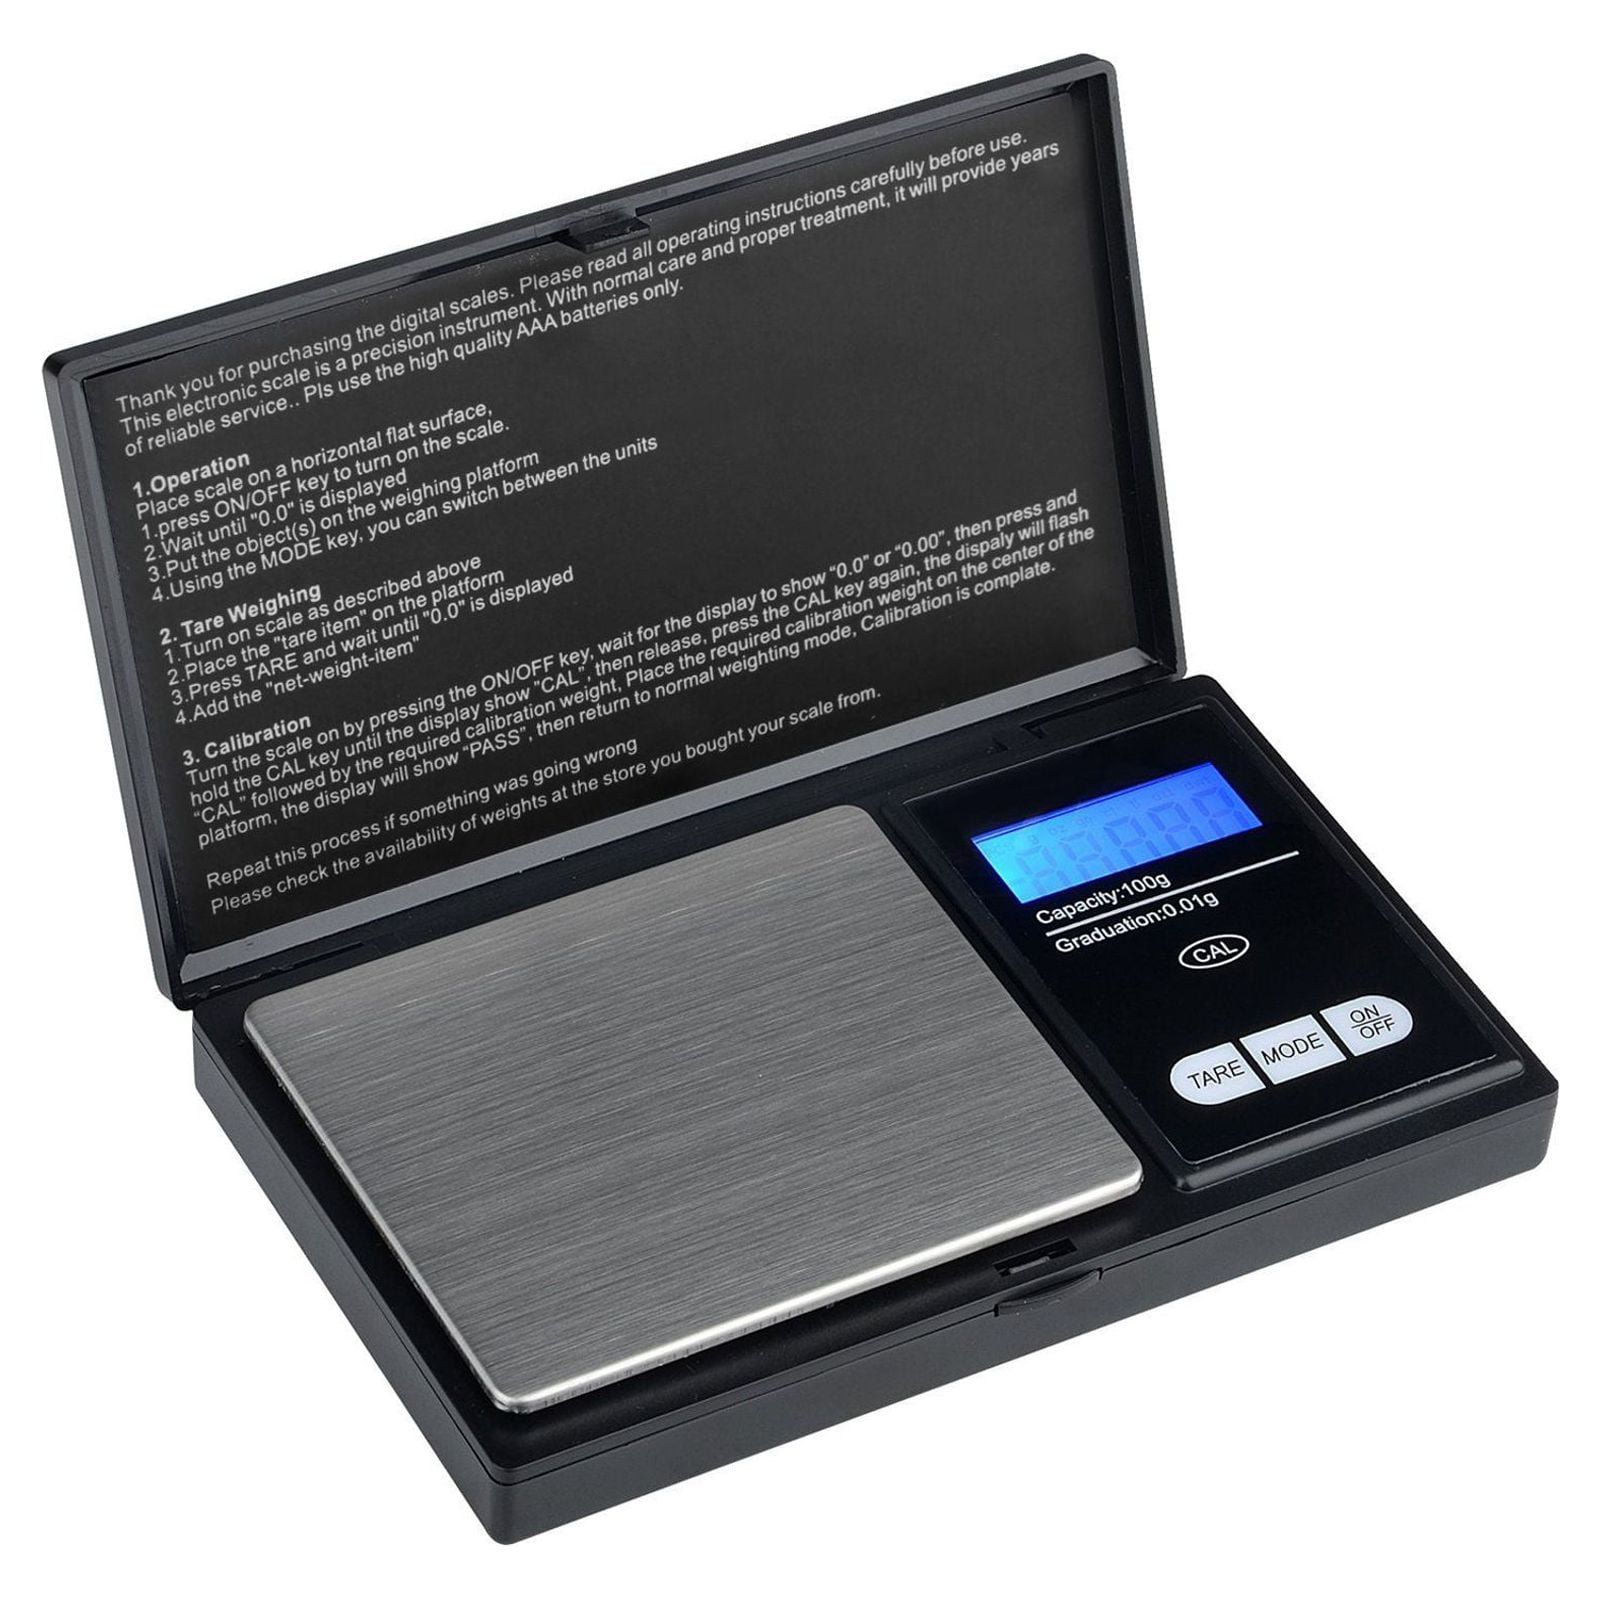 Digital Pocket Jewelry Scales - DSA-501